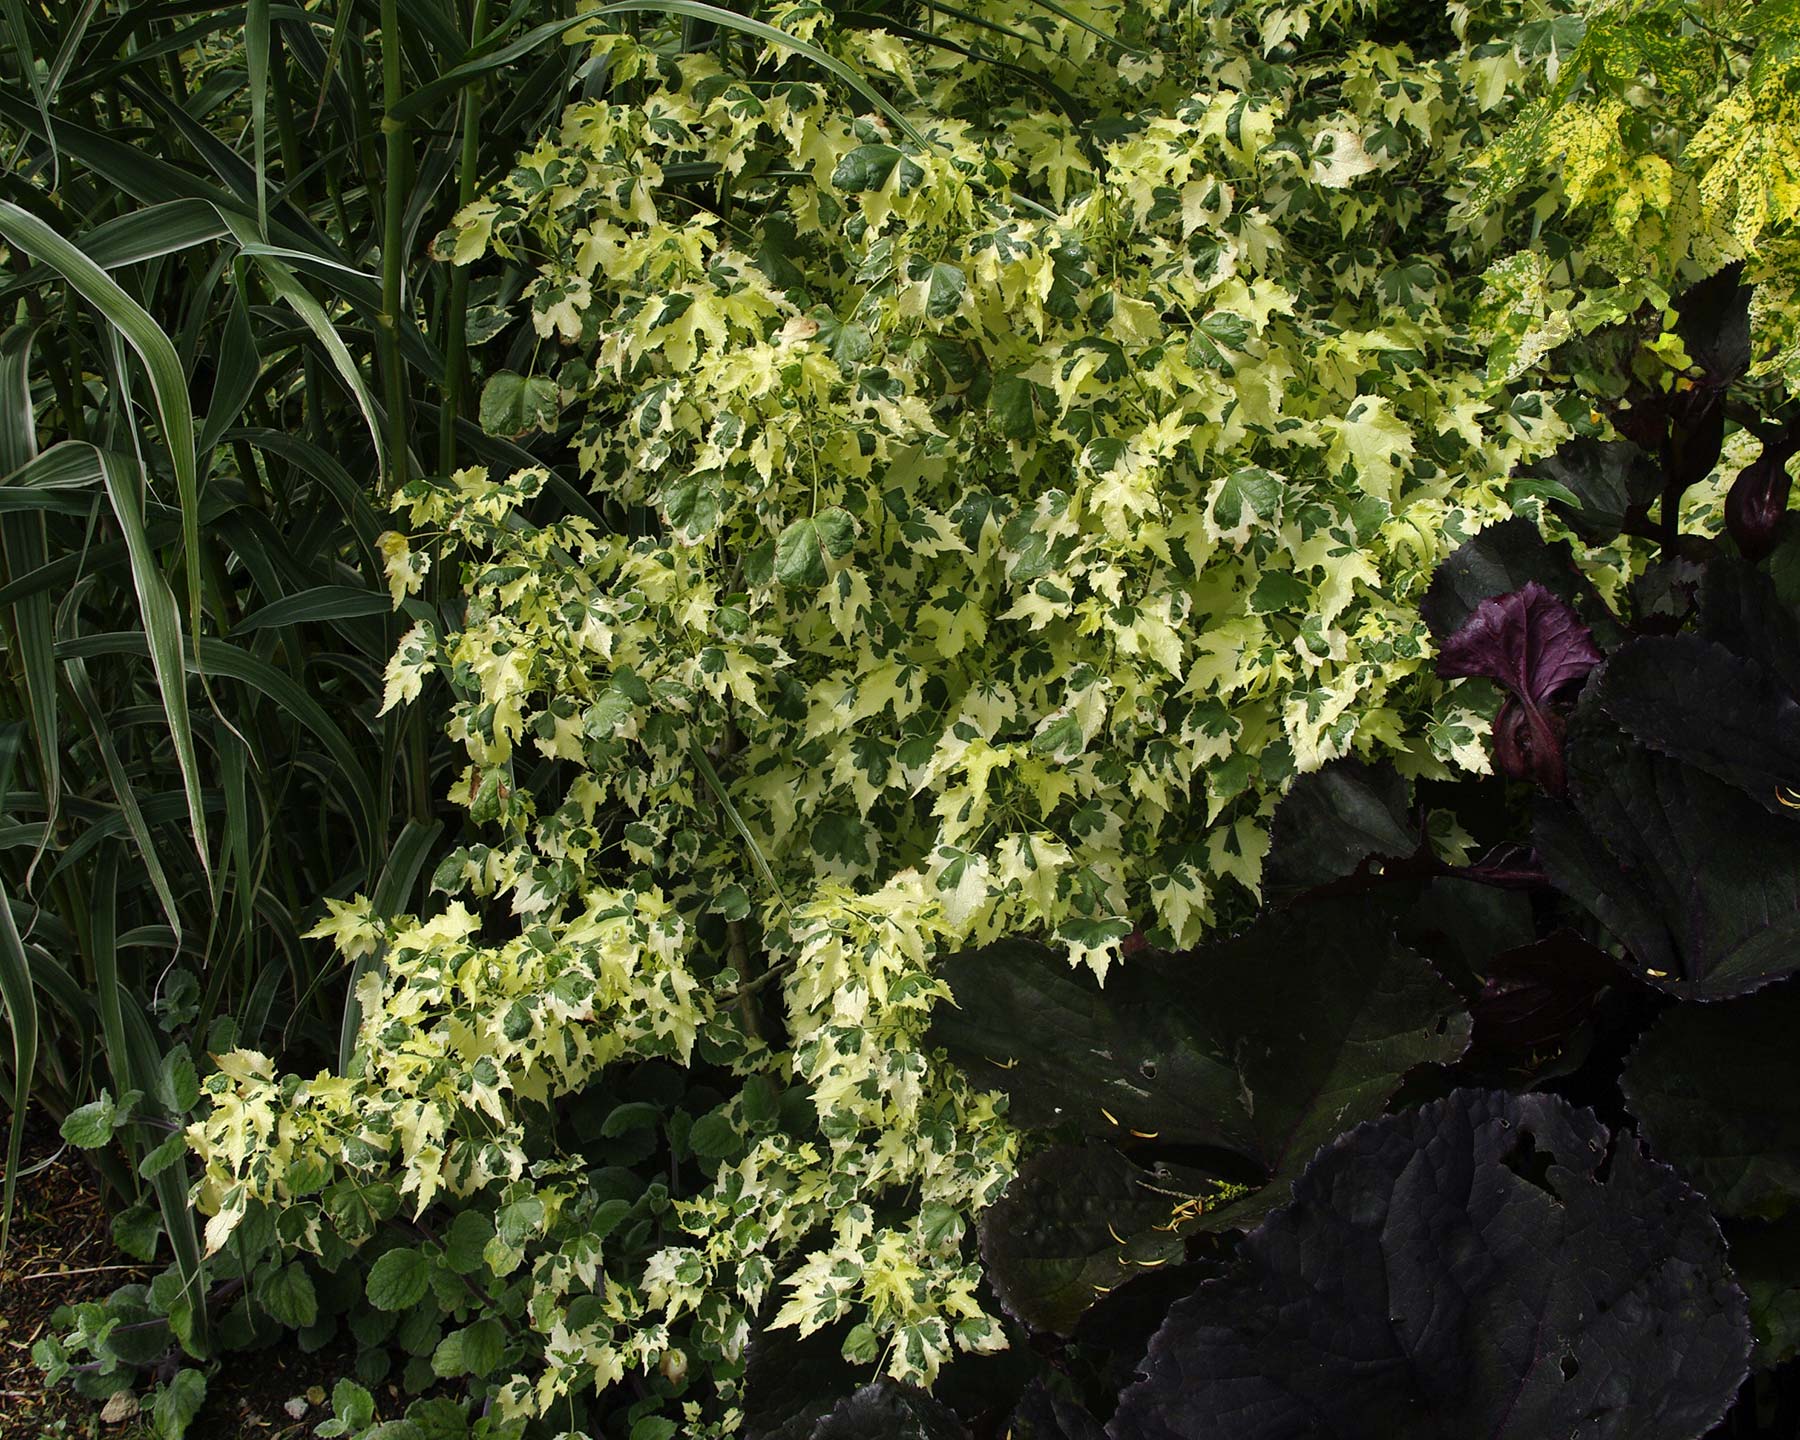 Abutilon hybrid with variegated foliage